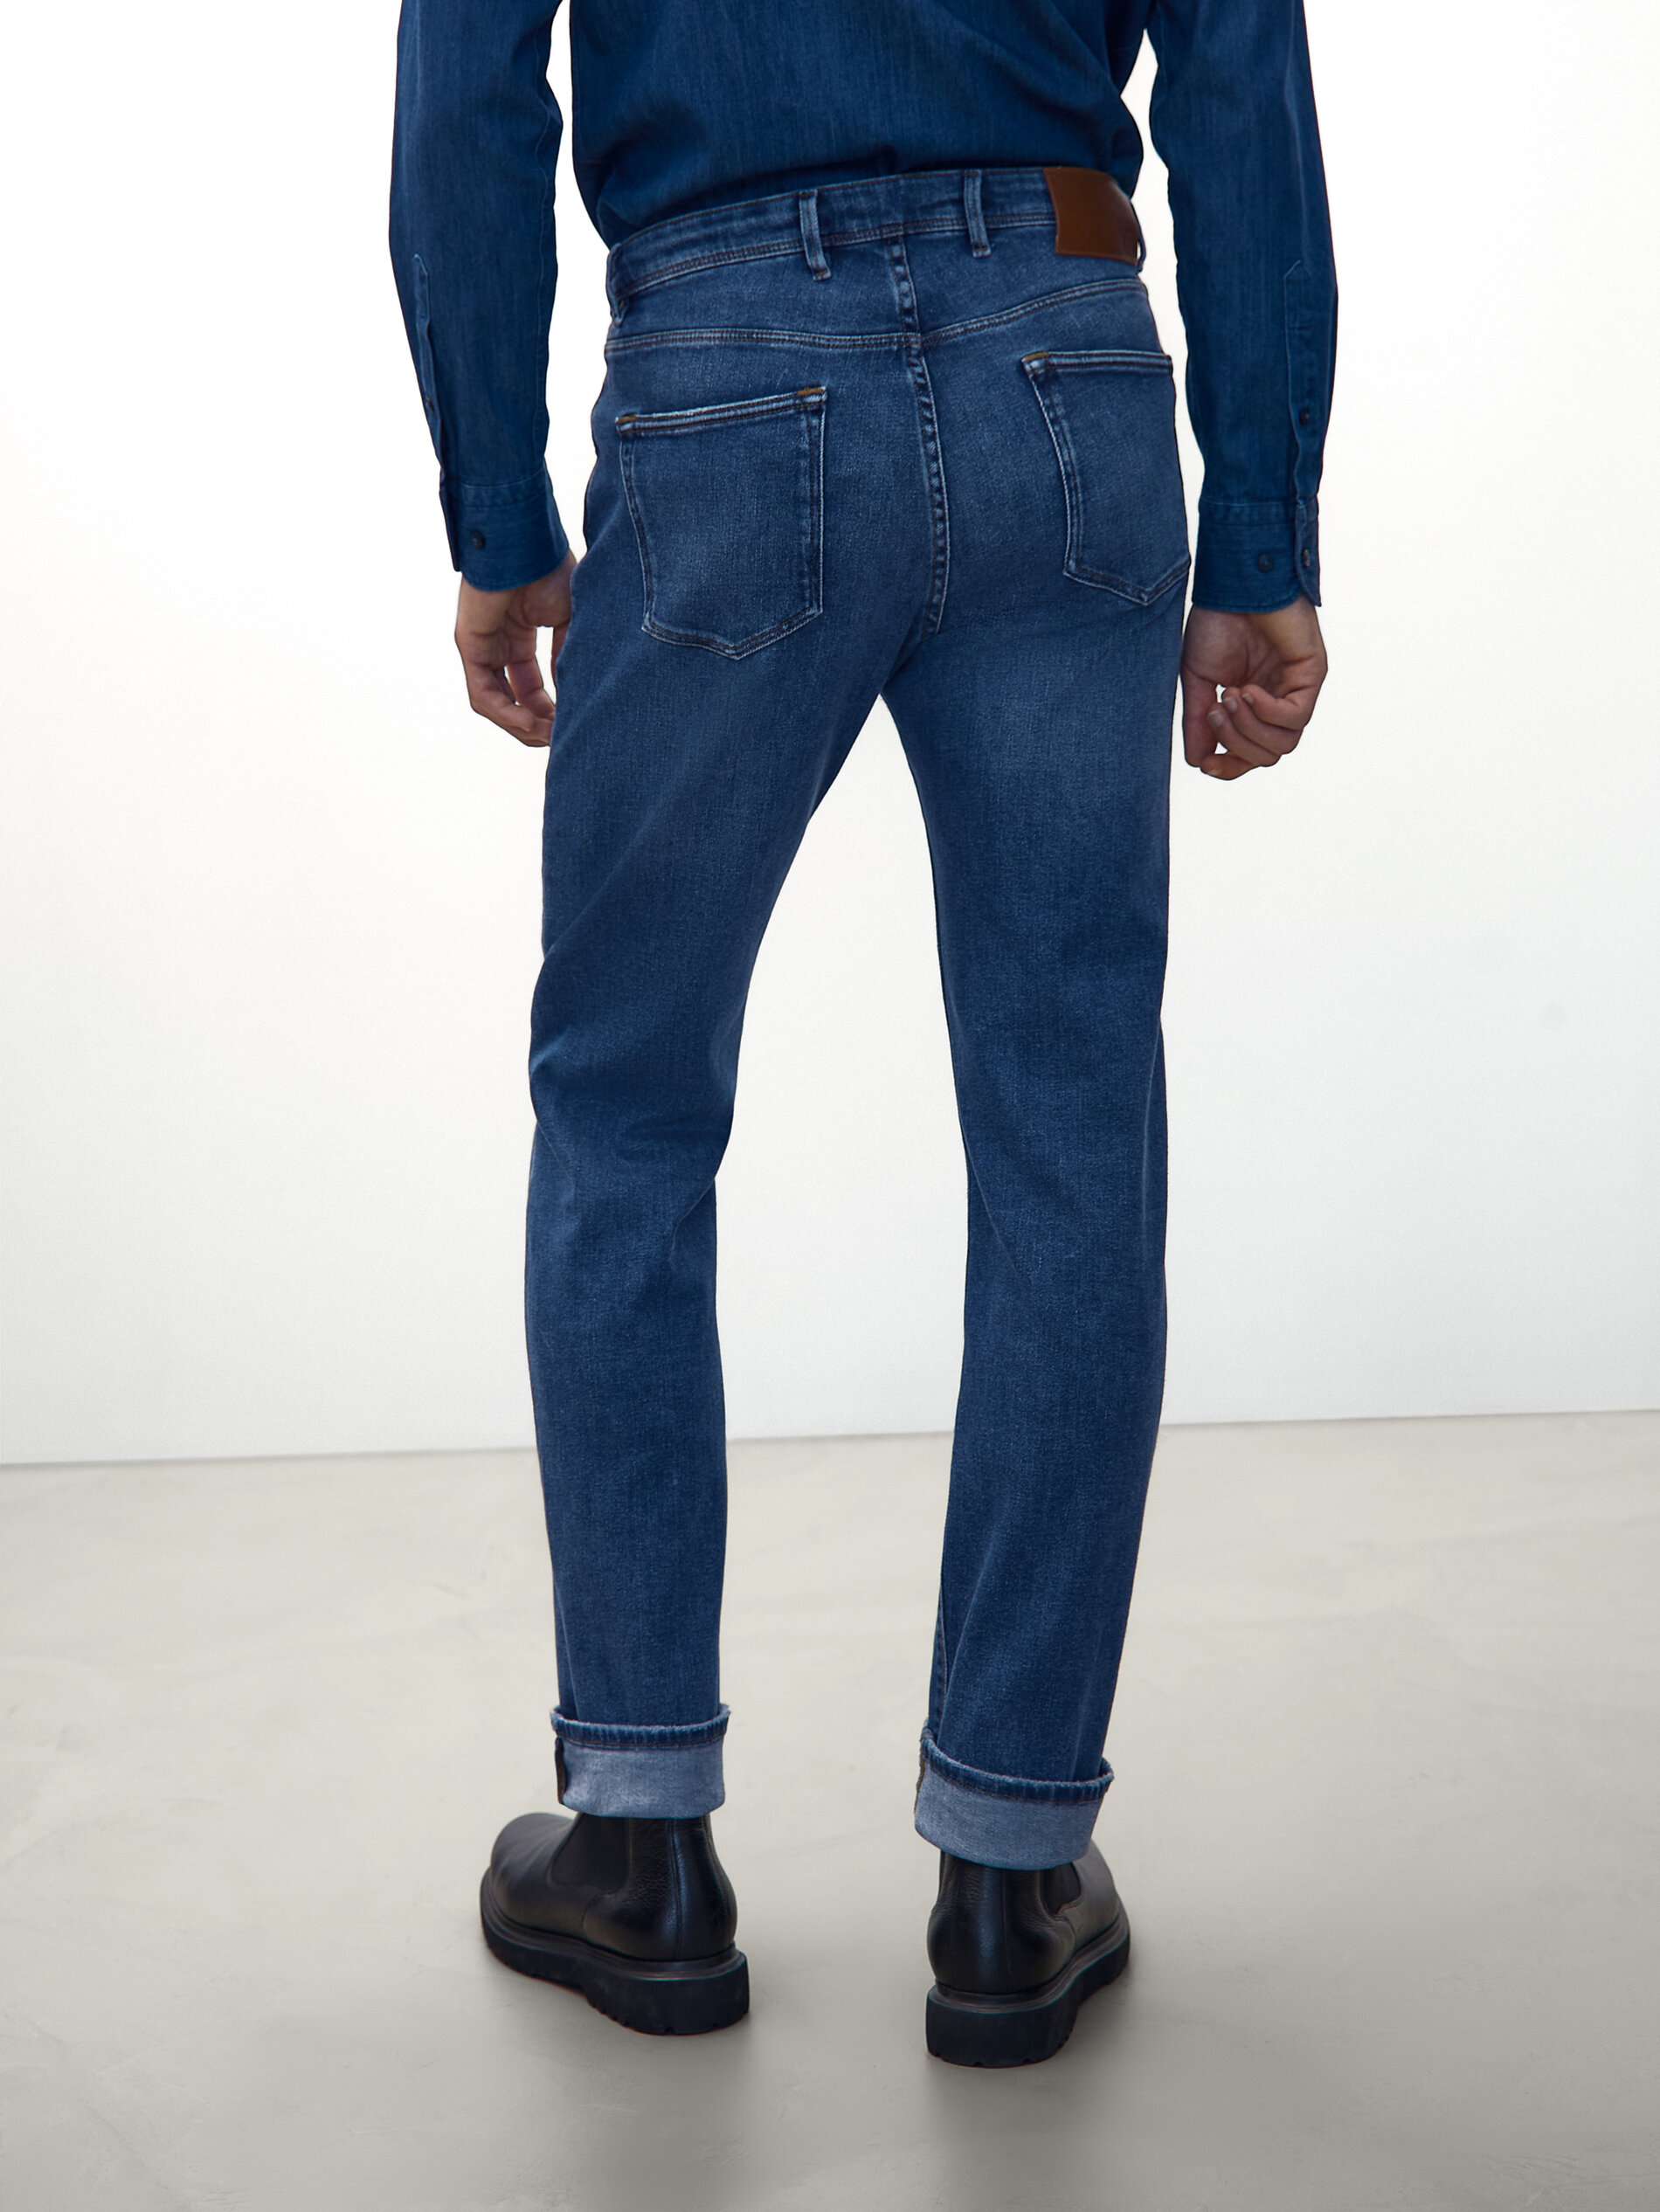 Massimo Dutti Regular Fit Stone Wash Jeans - Big Apple Buddy